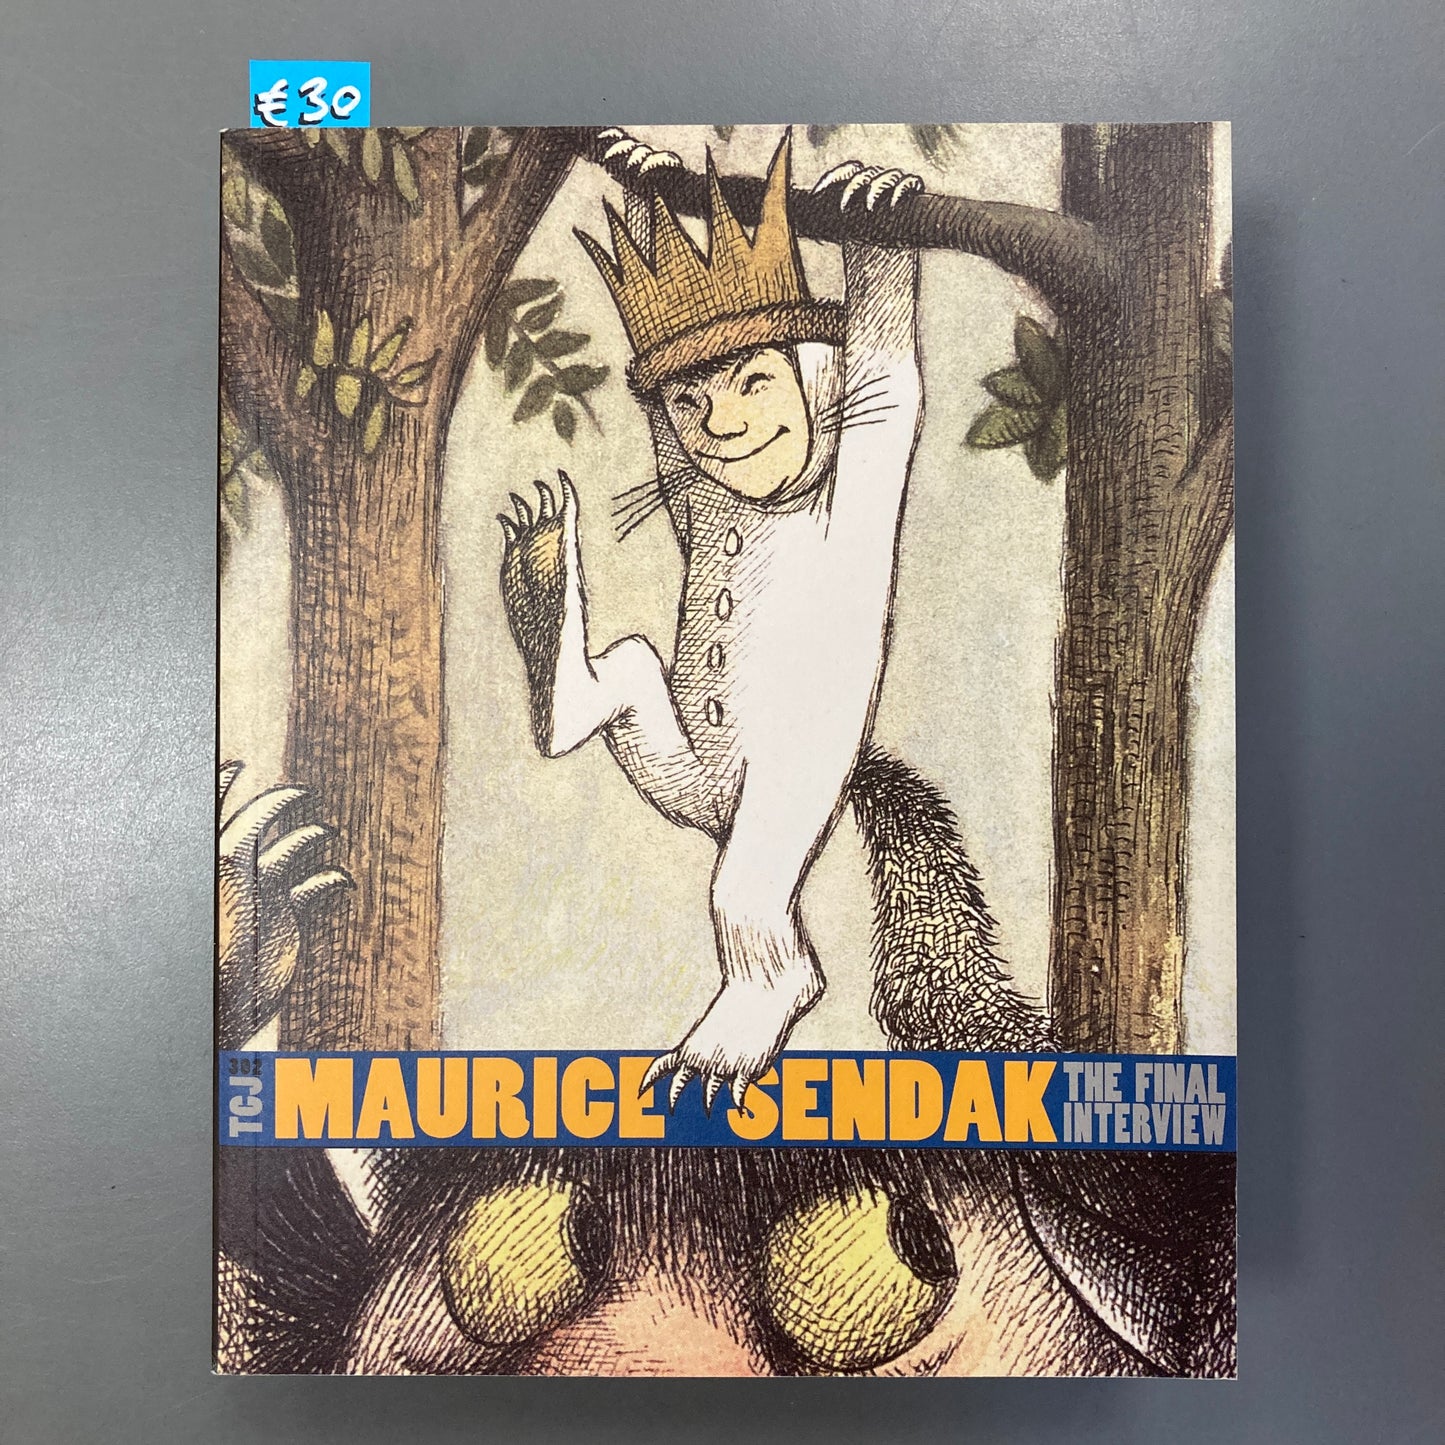 The Comics Journal #302: Interviews with Maurice Sendak & Jacques Tardi